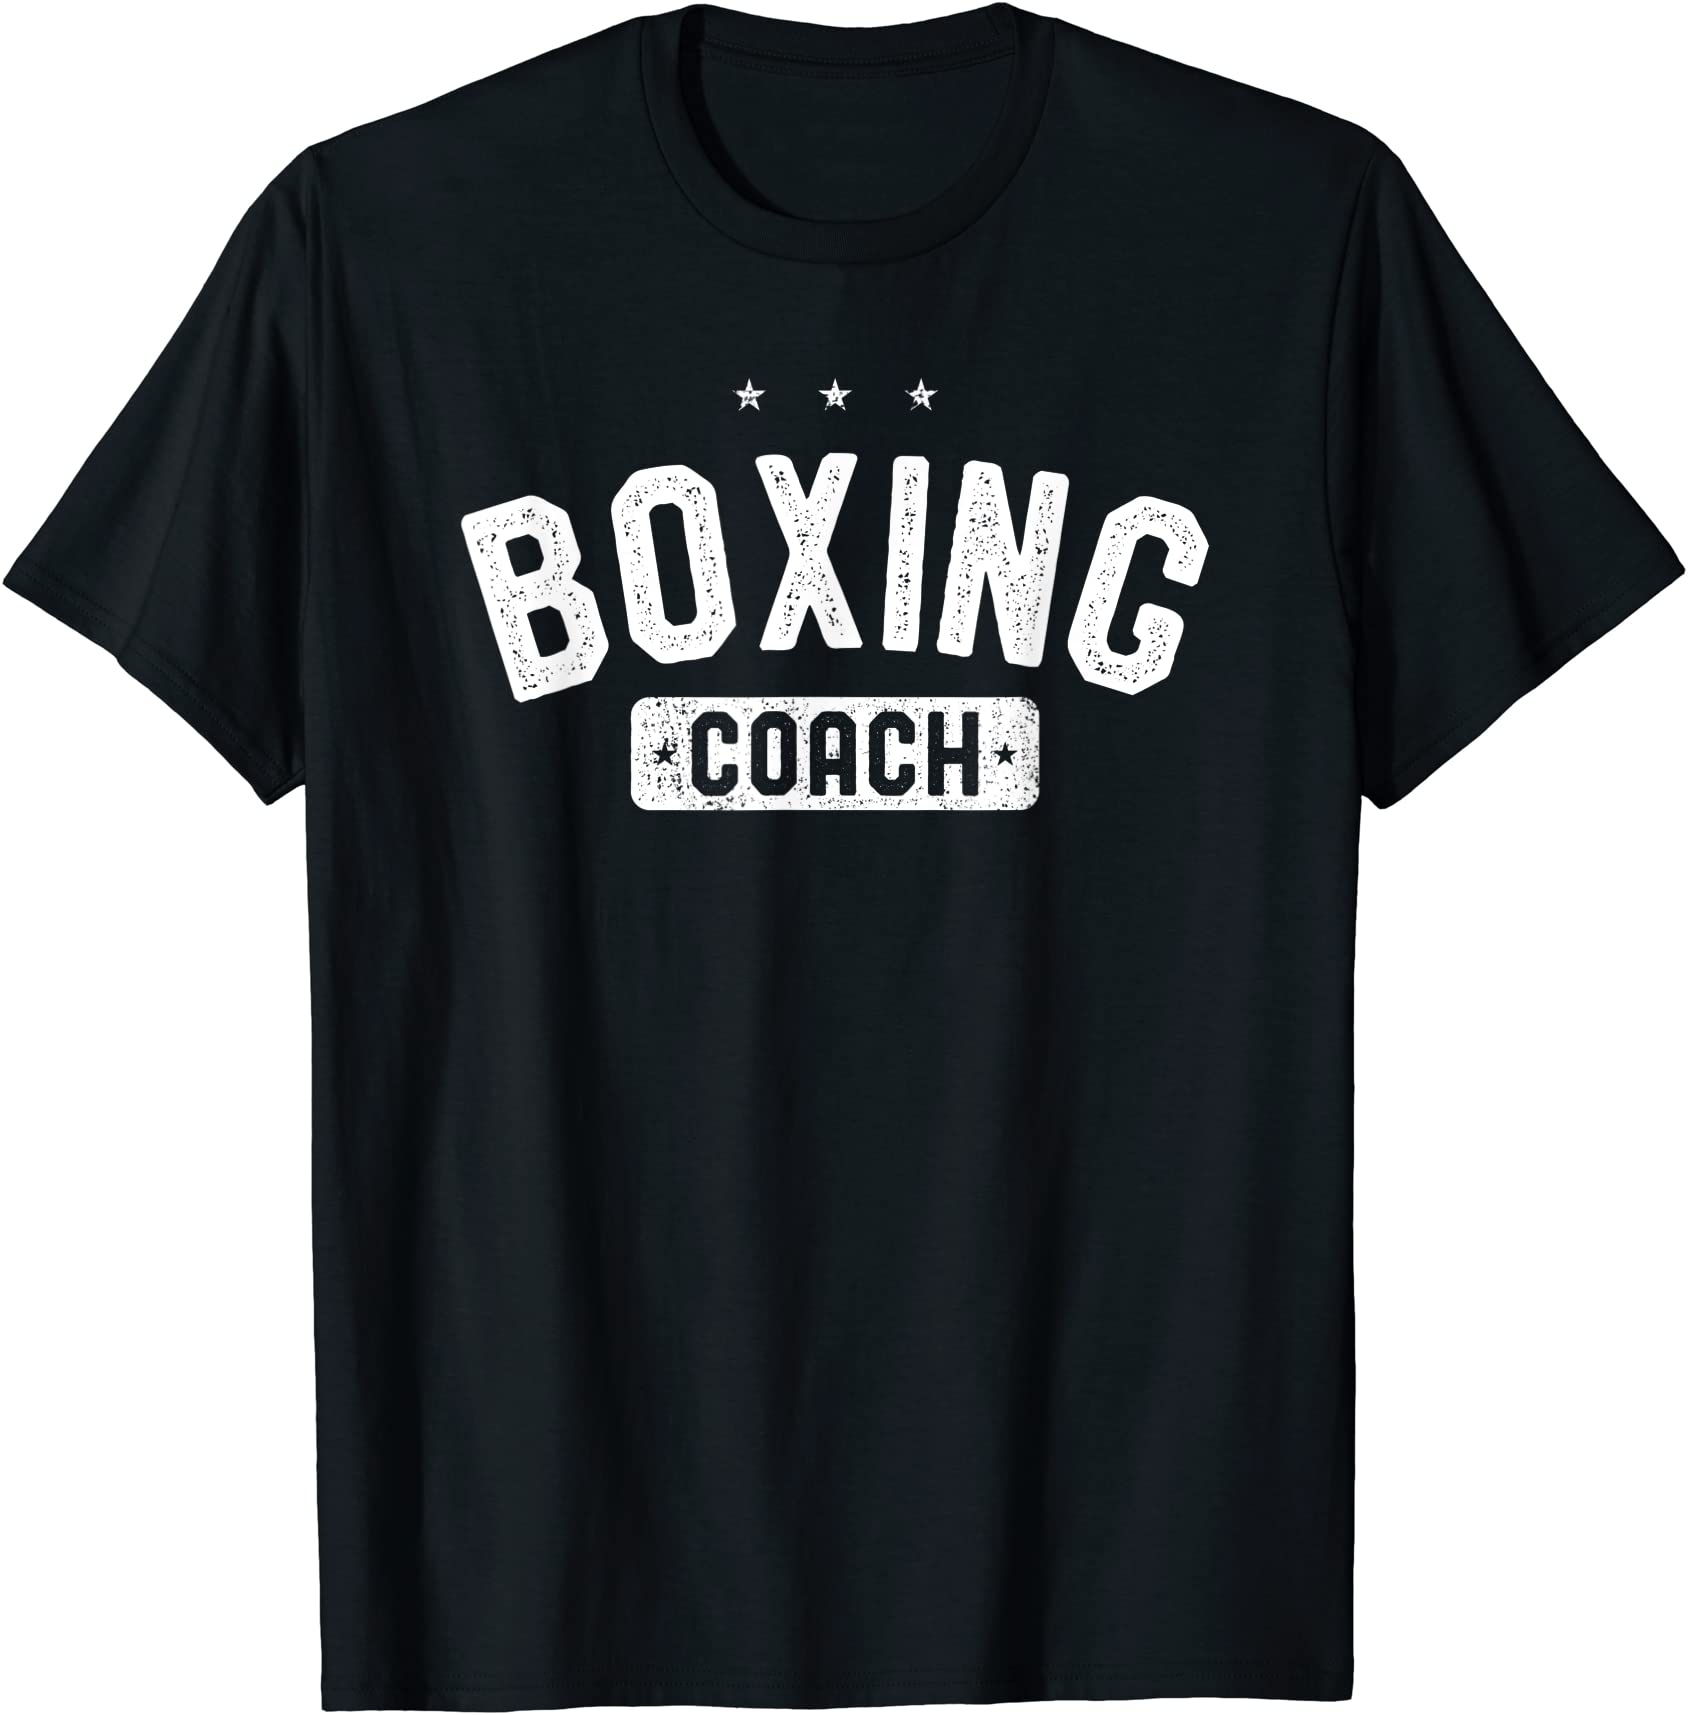 boxing coach vintage boxing t shirt men - Buy t-shirt designs